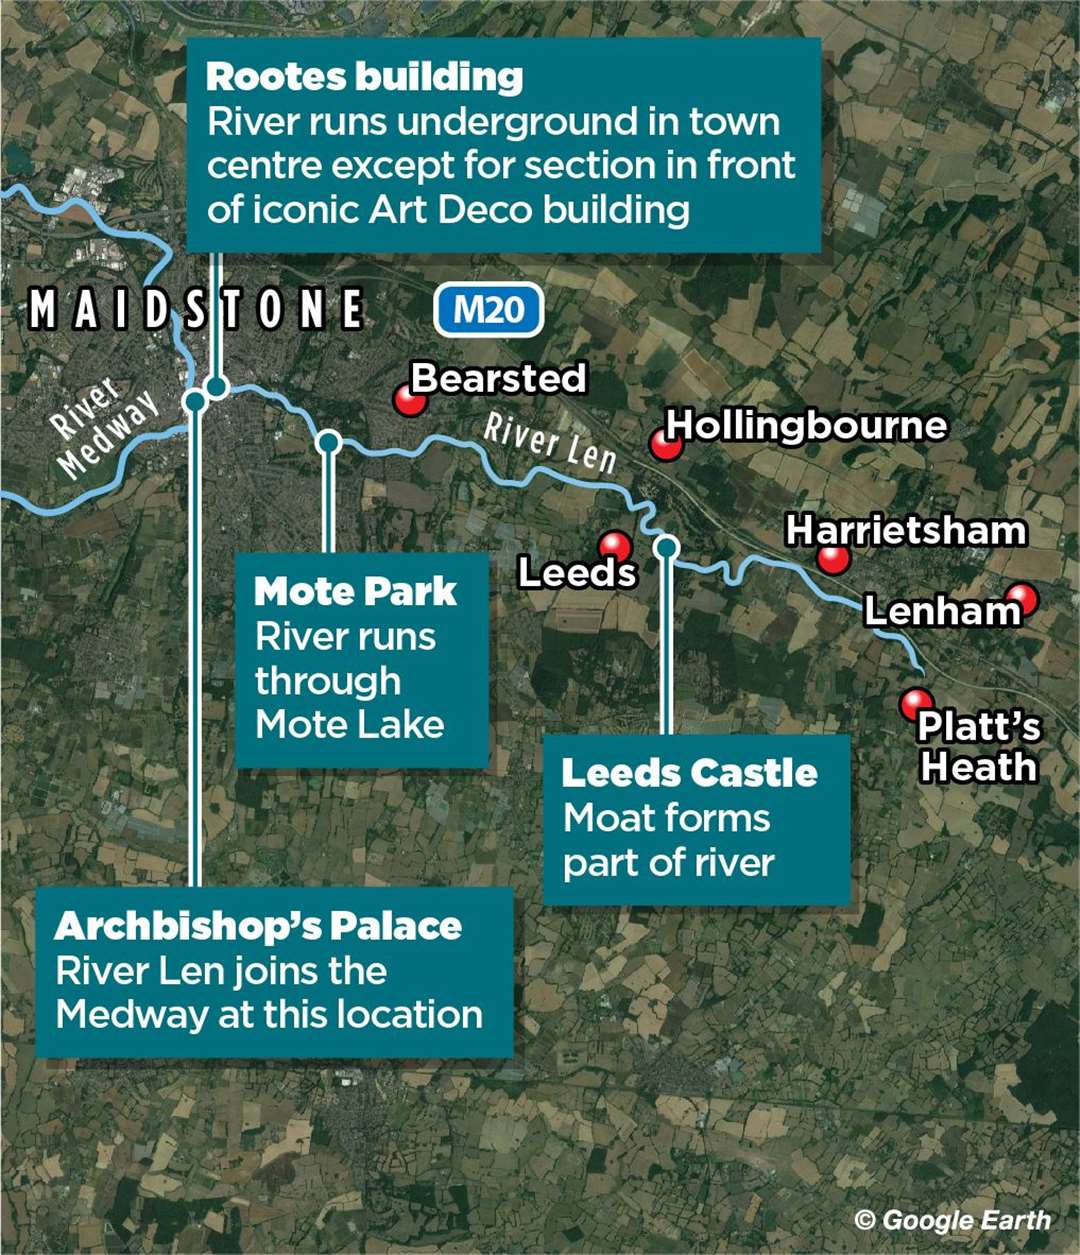 The course of the River Len through Maidstone